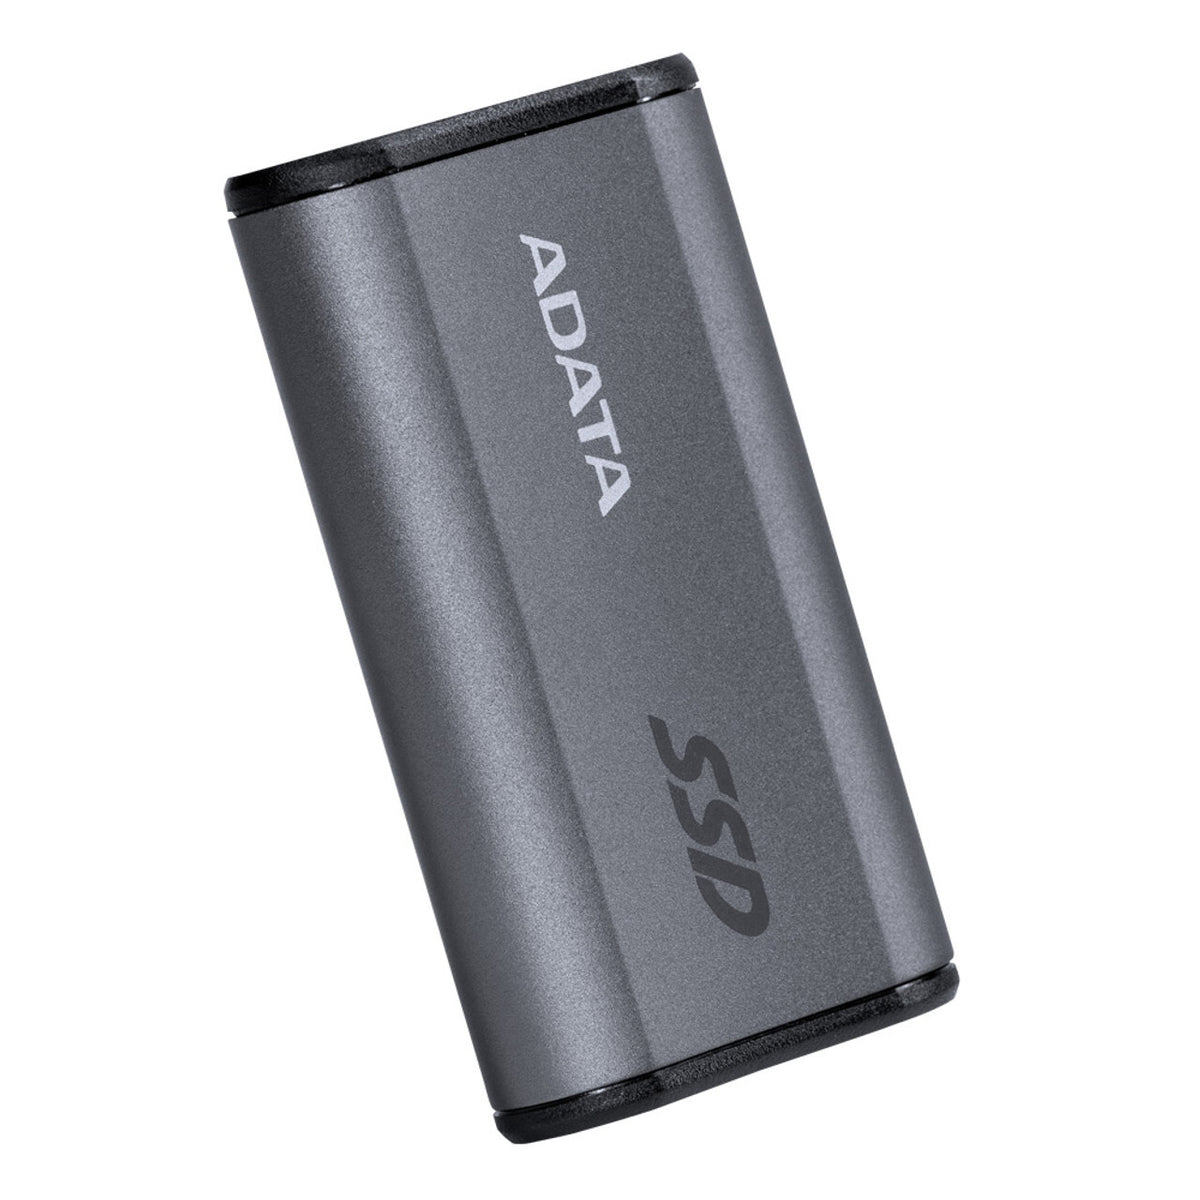 ADATA SE880 - USB Type-C External SSD in Grey - 500 GB